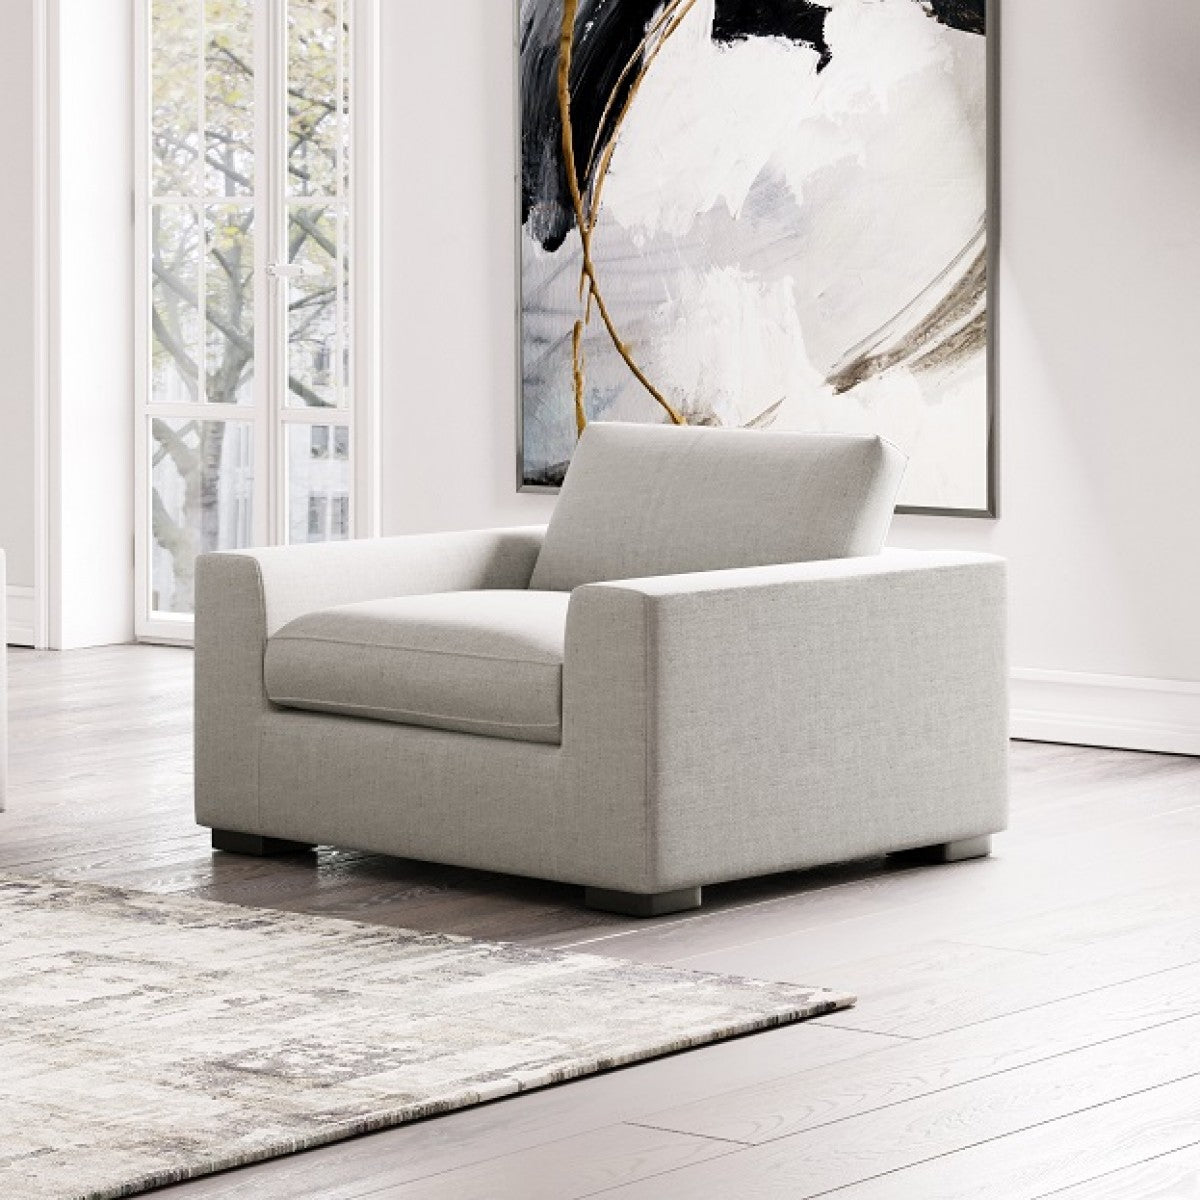 Divani Casa Poppy - Modern White Fabric Lounge Chair